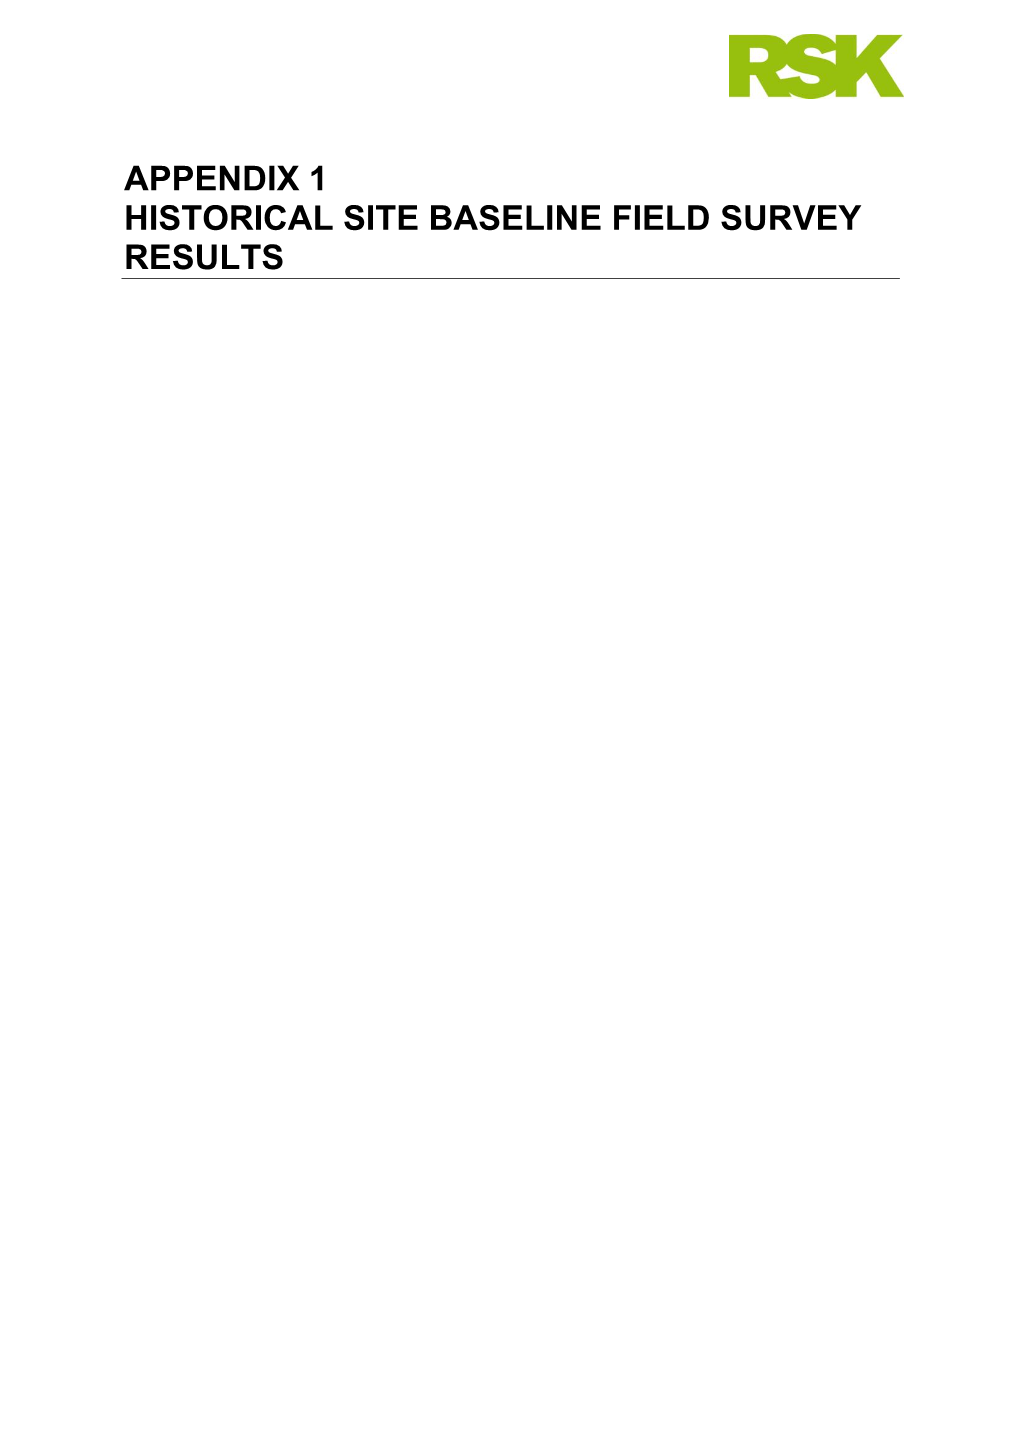 Appendix 1 Historical Site Baseline Field Survey Results